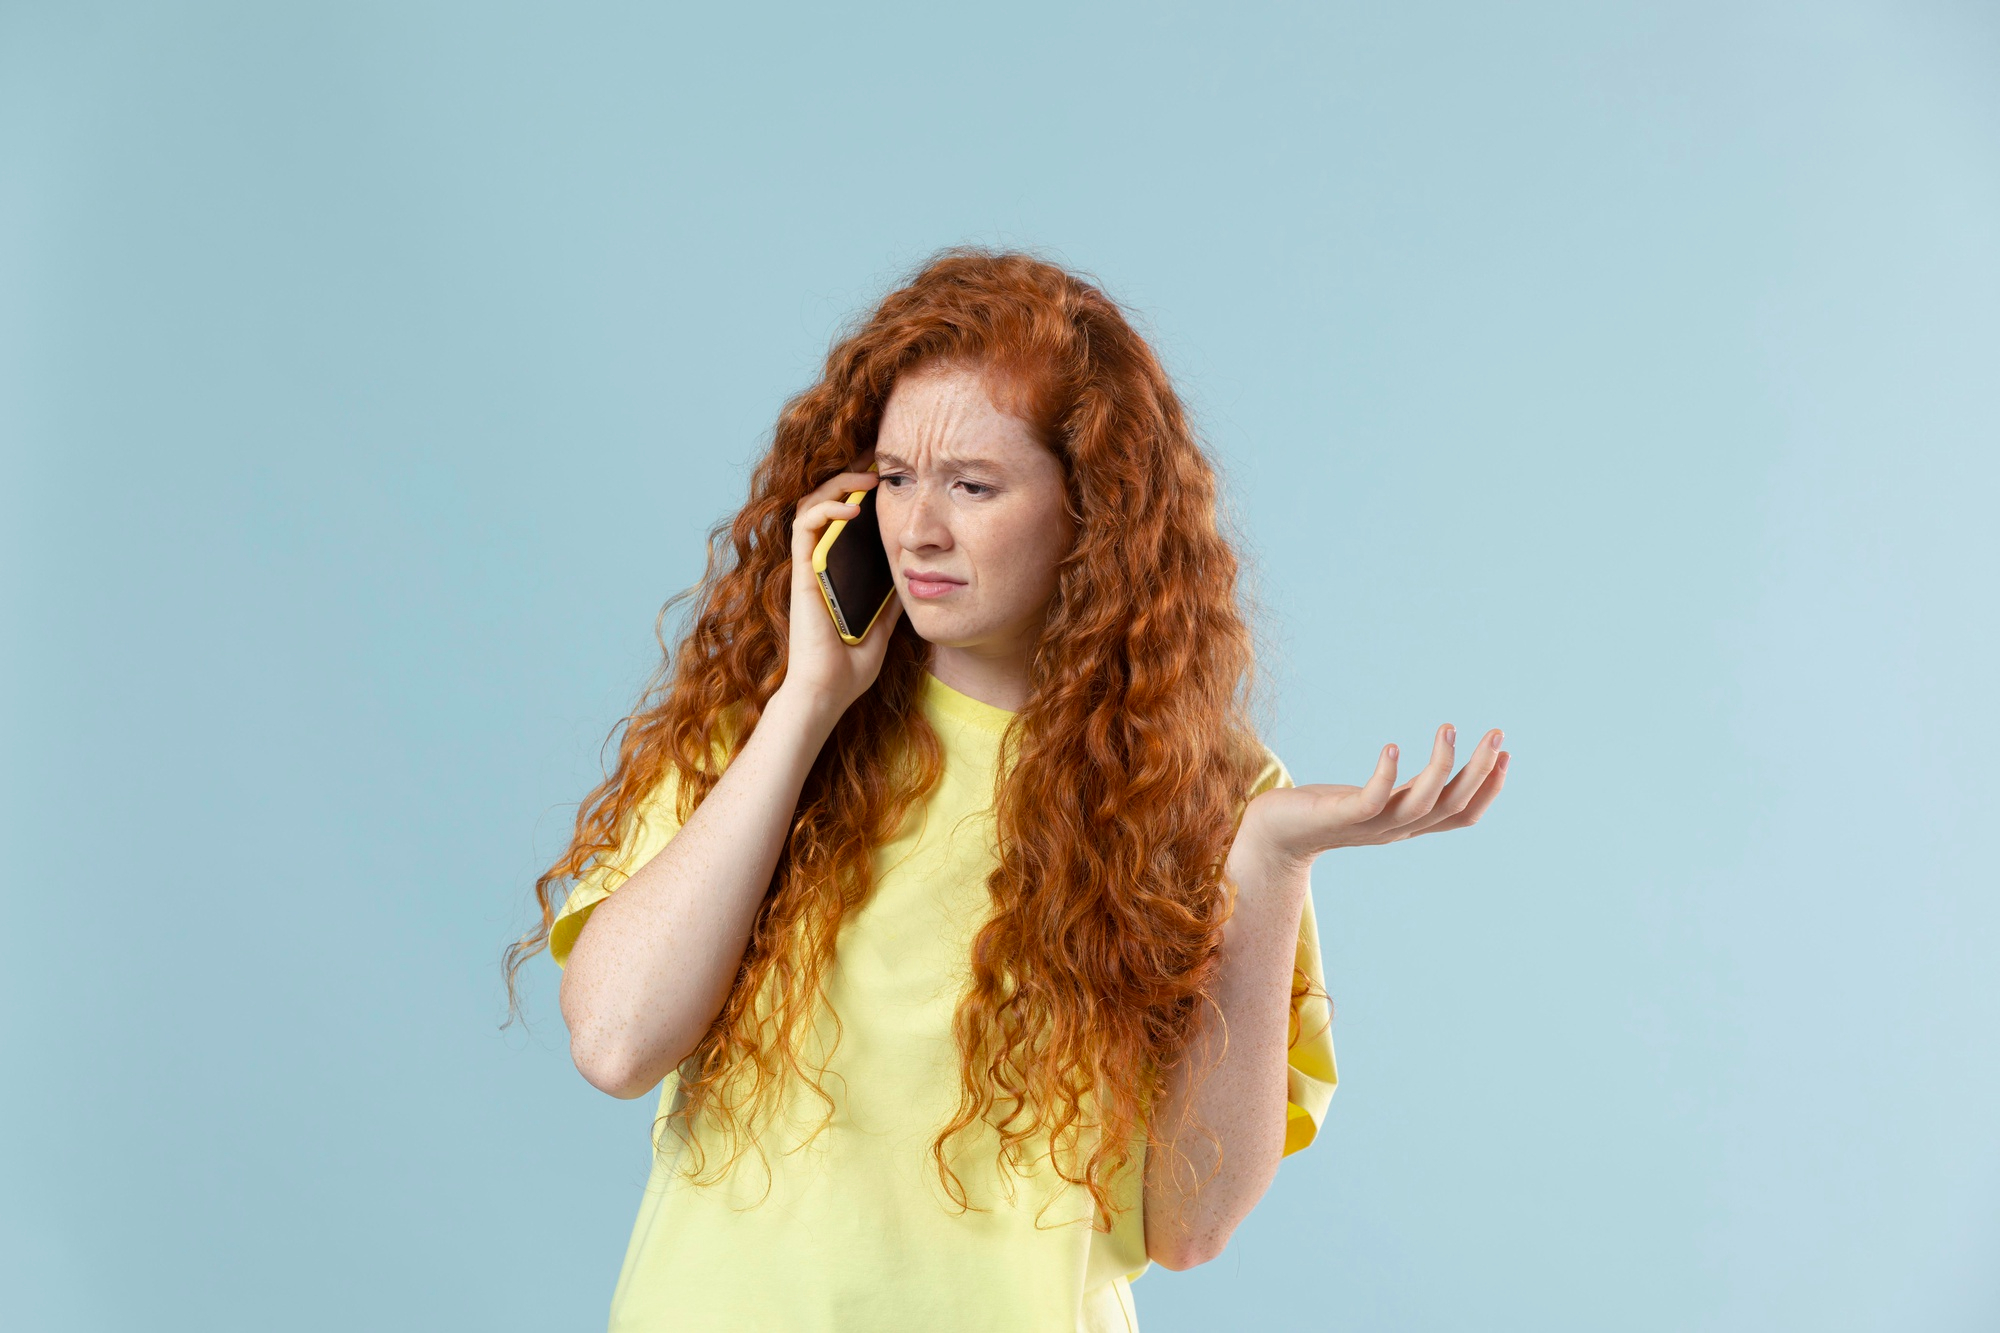 An unhappy woman talking on the phone | Source: Freepik